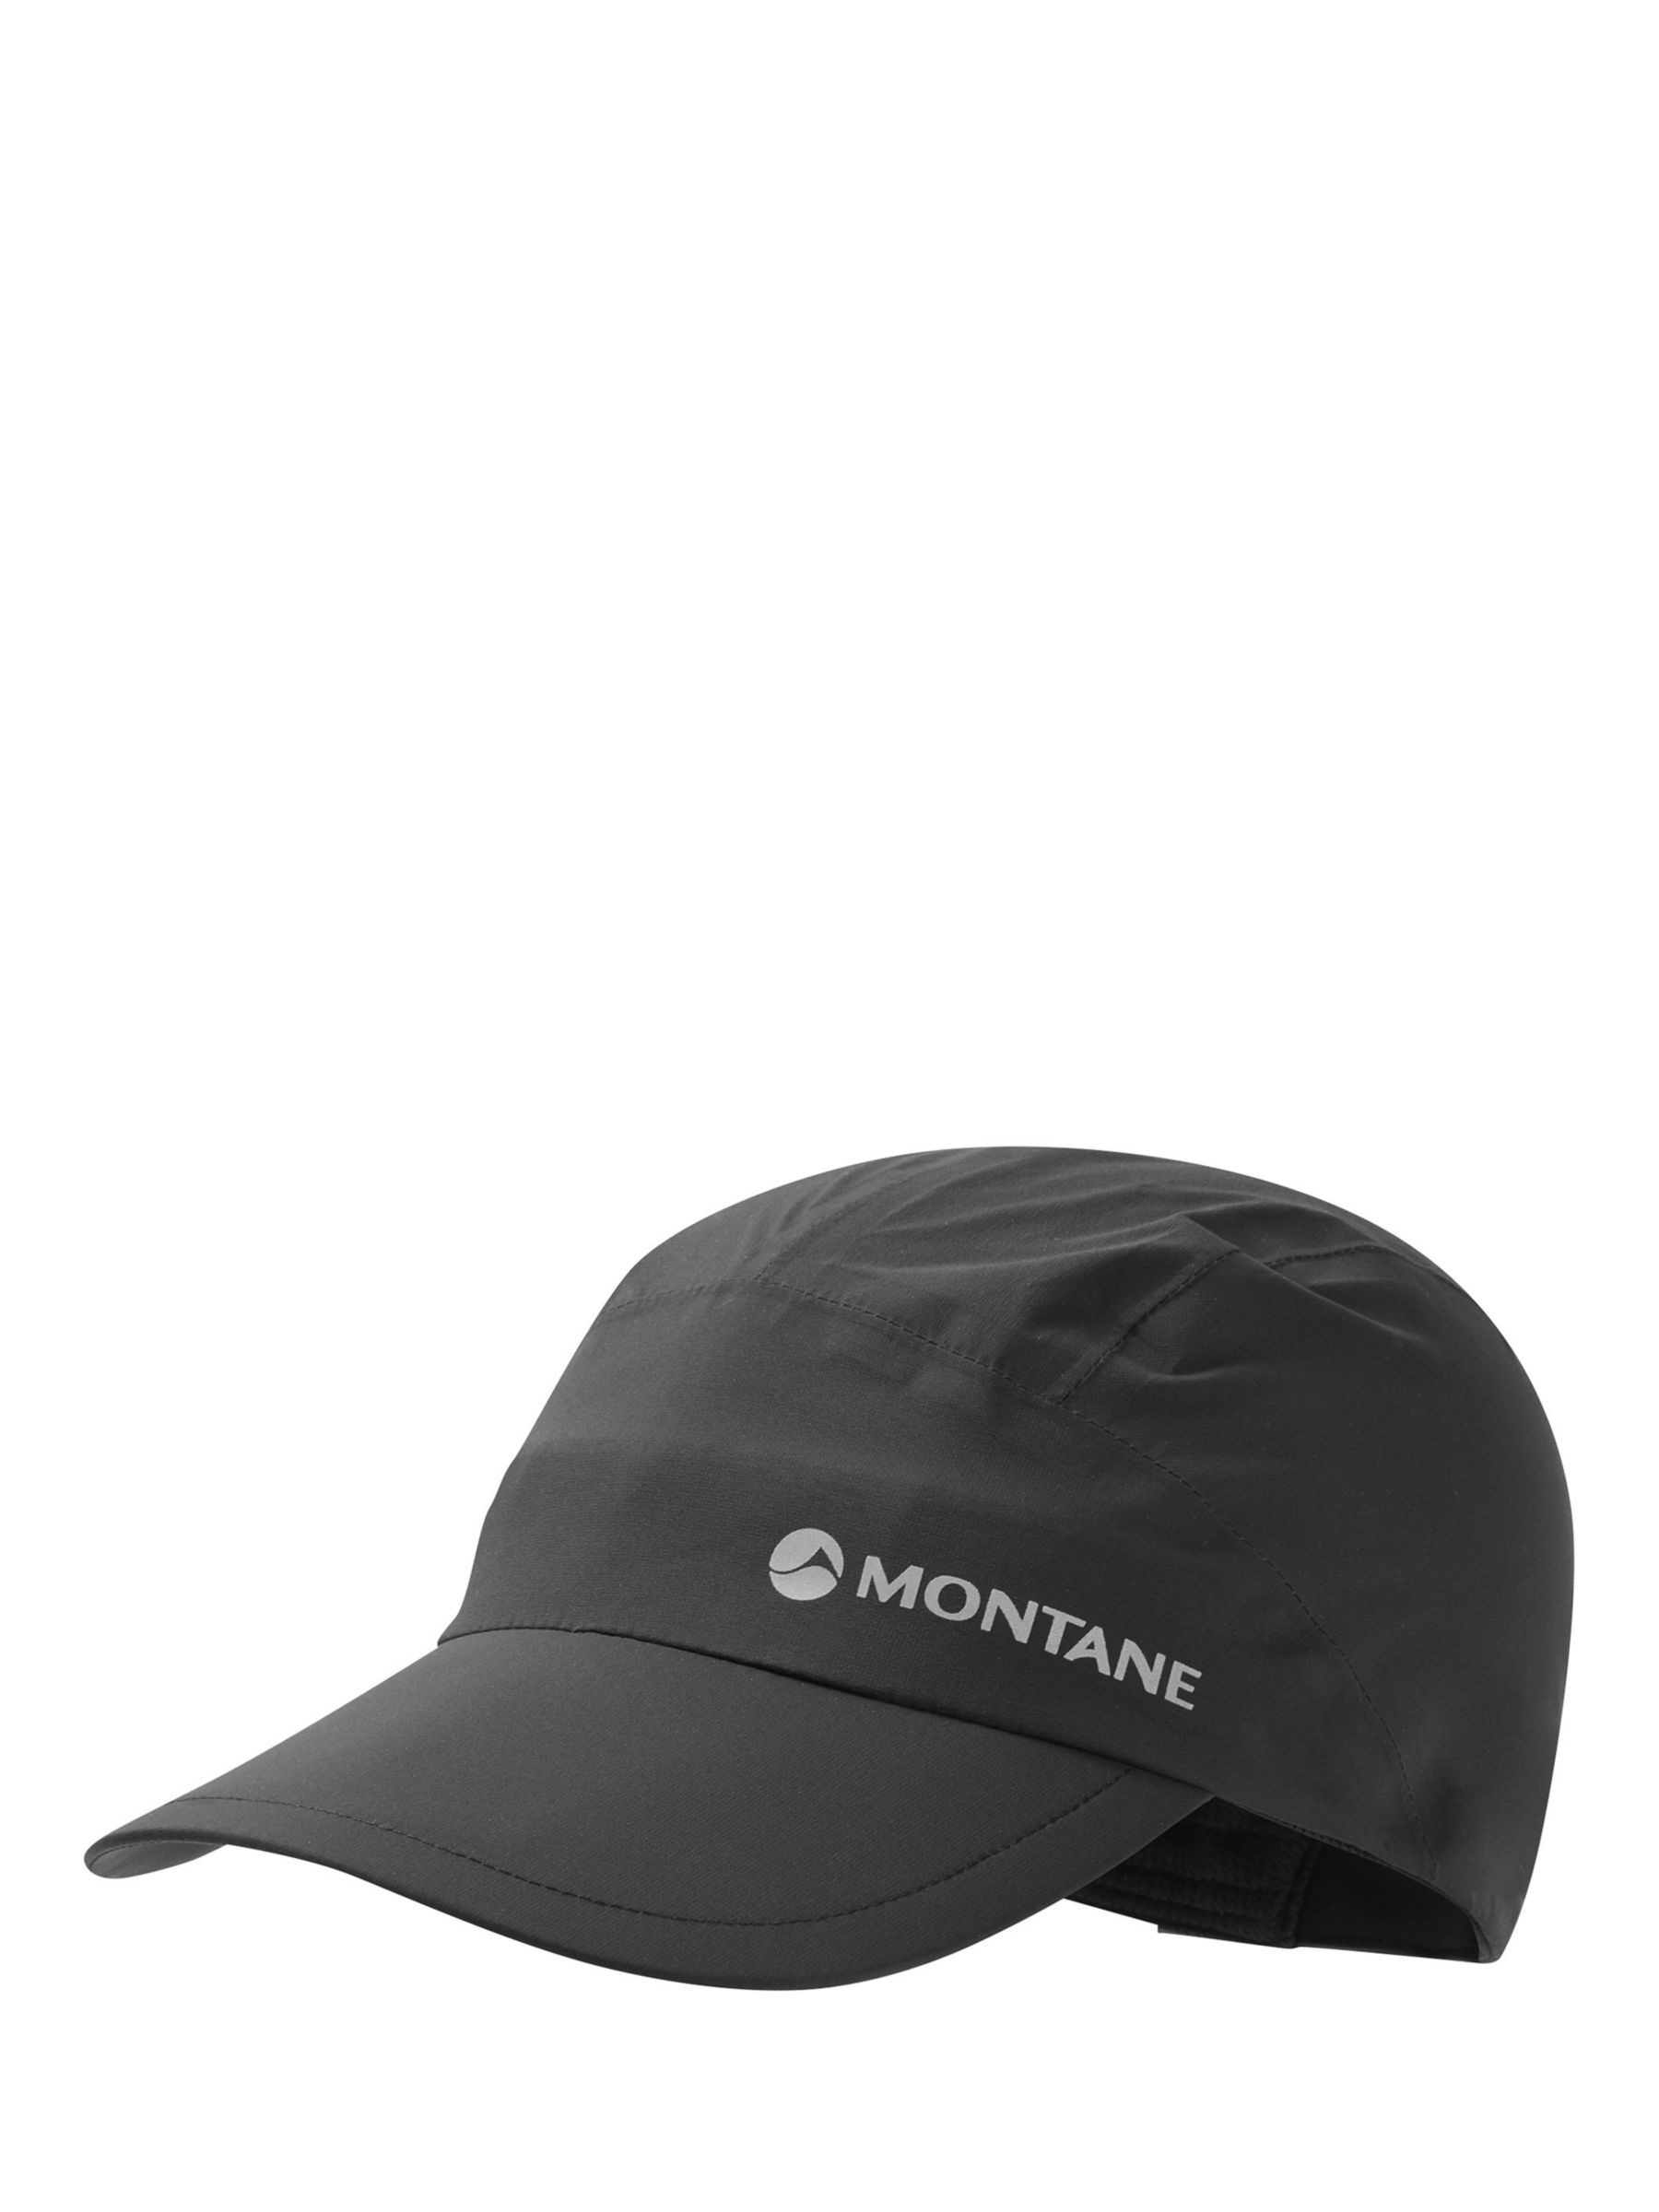 Montane Minimus Lite Cap, Black, One Size